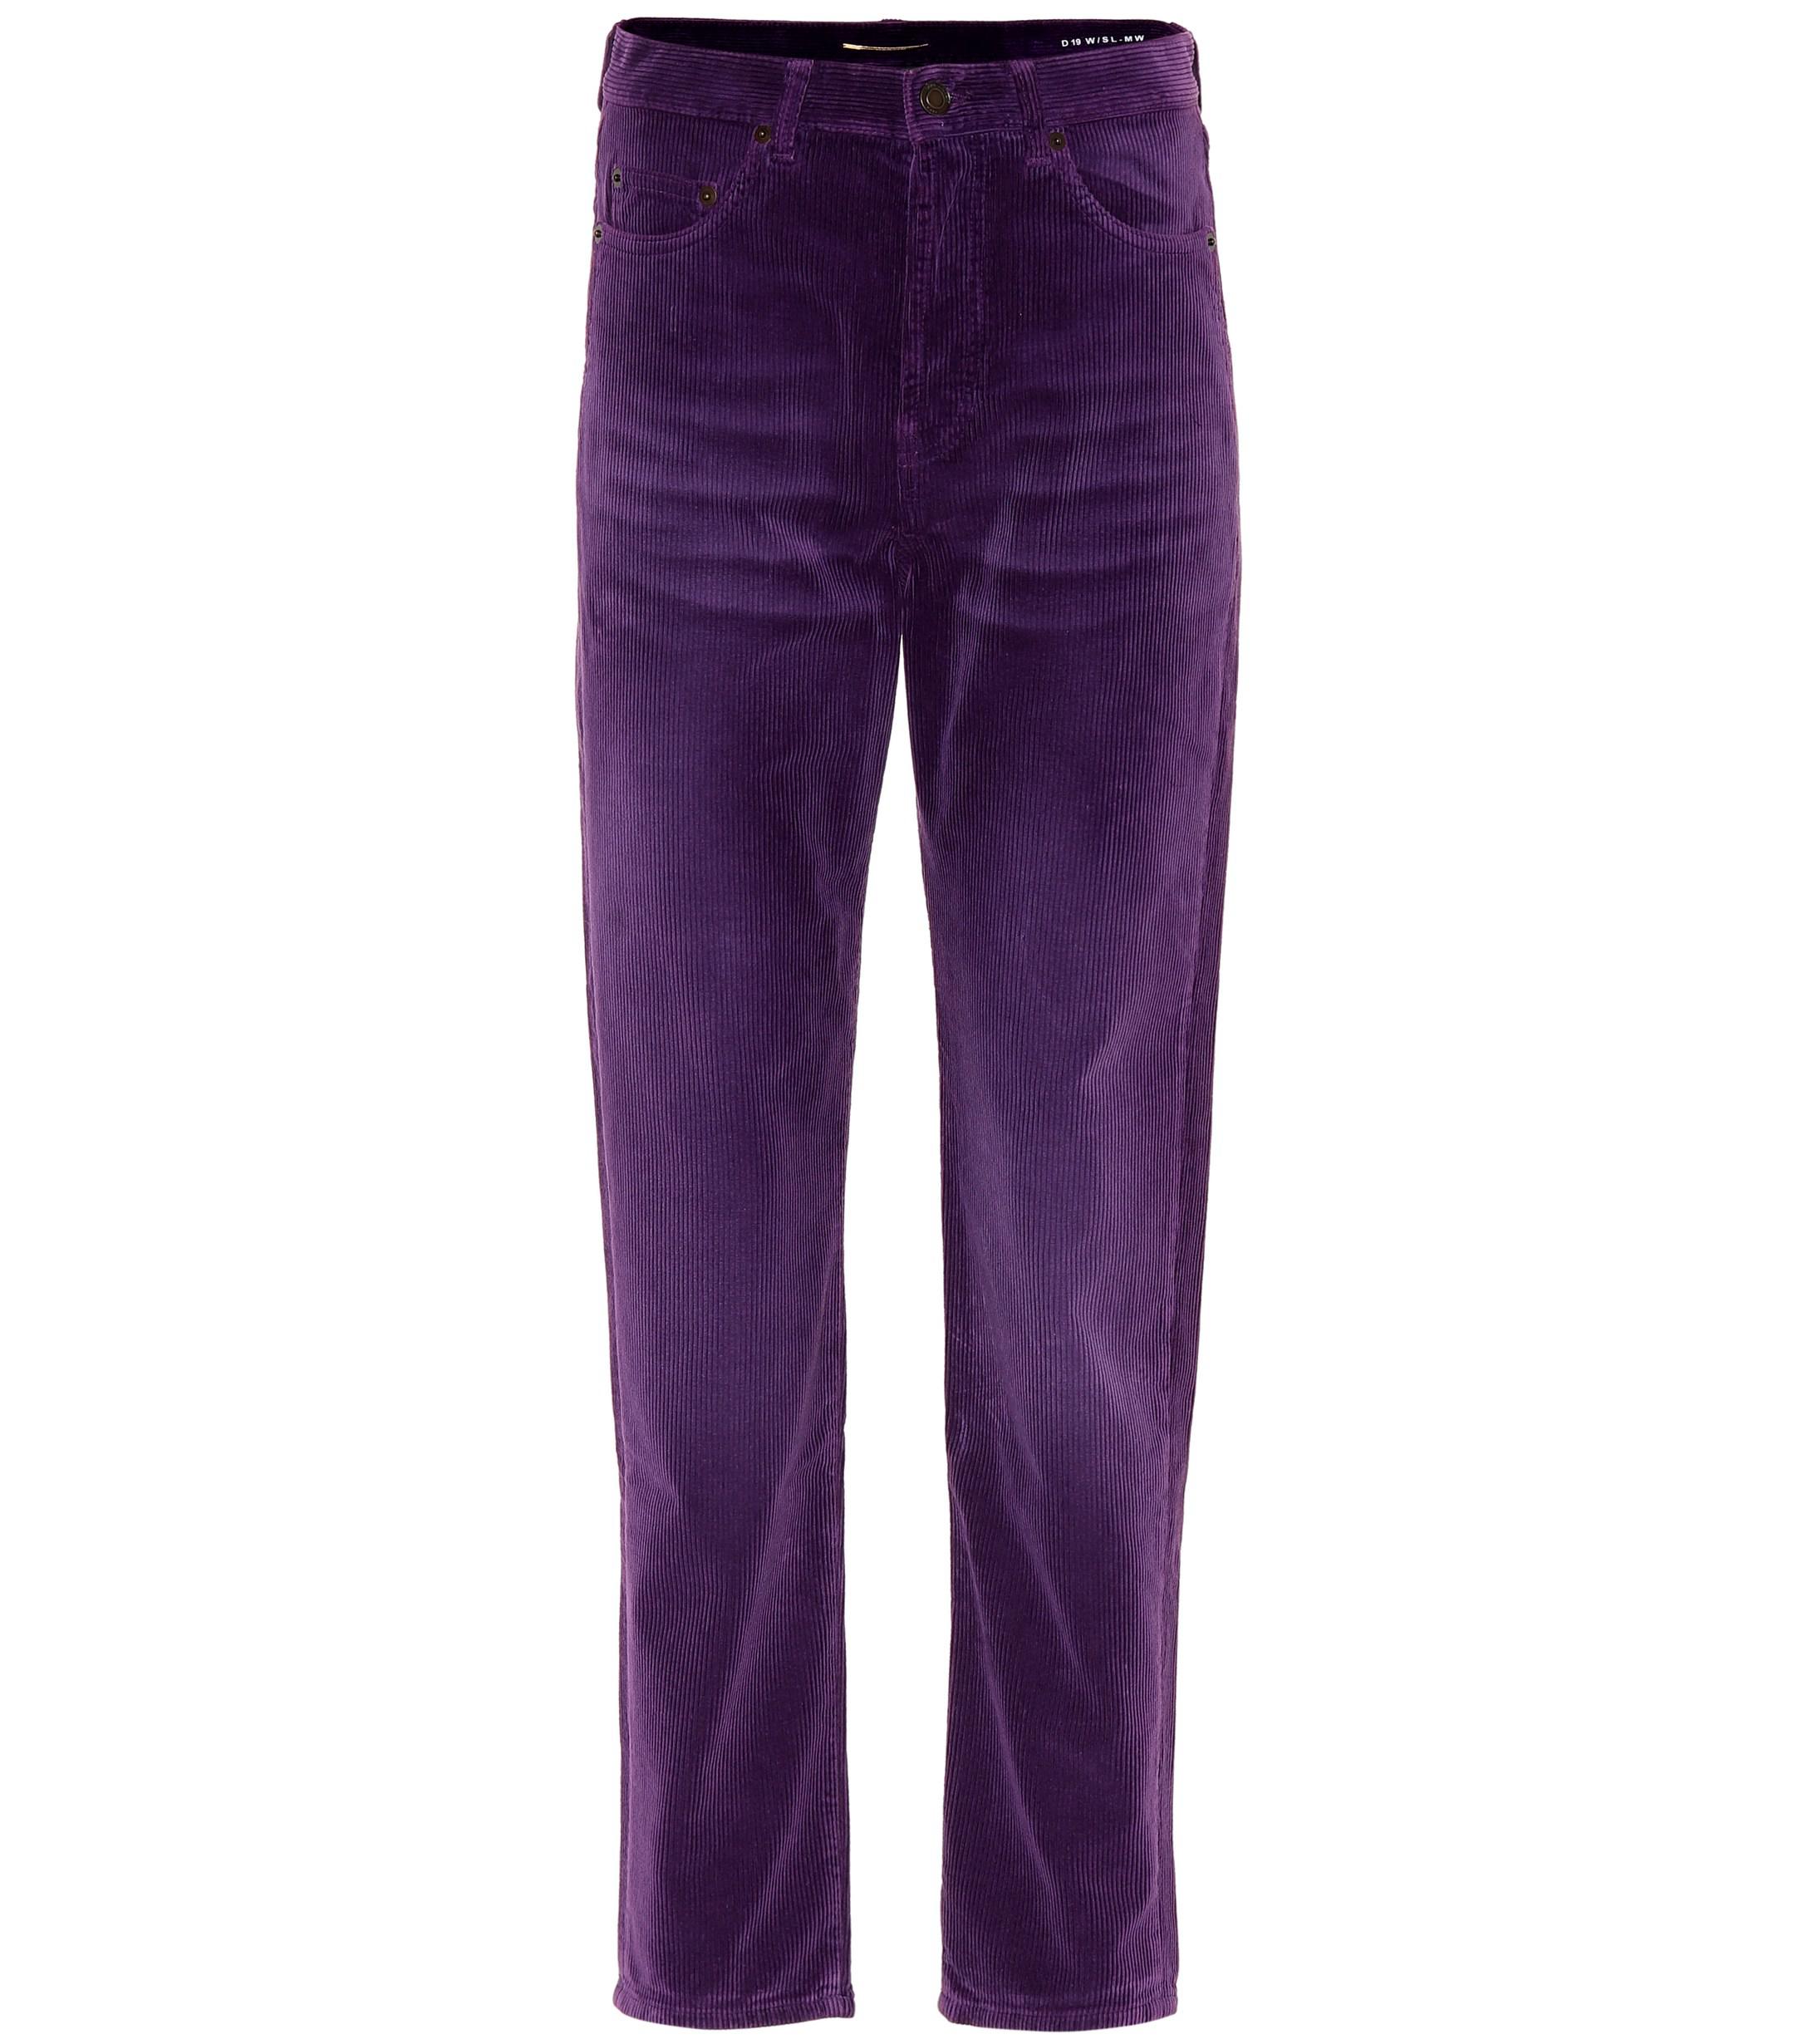 Saint Laurent Slim Corduroy Pants in Fuchsia (Purple) - Lyst